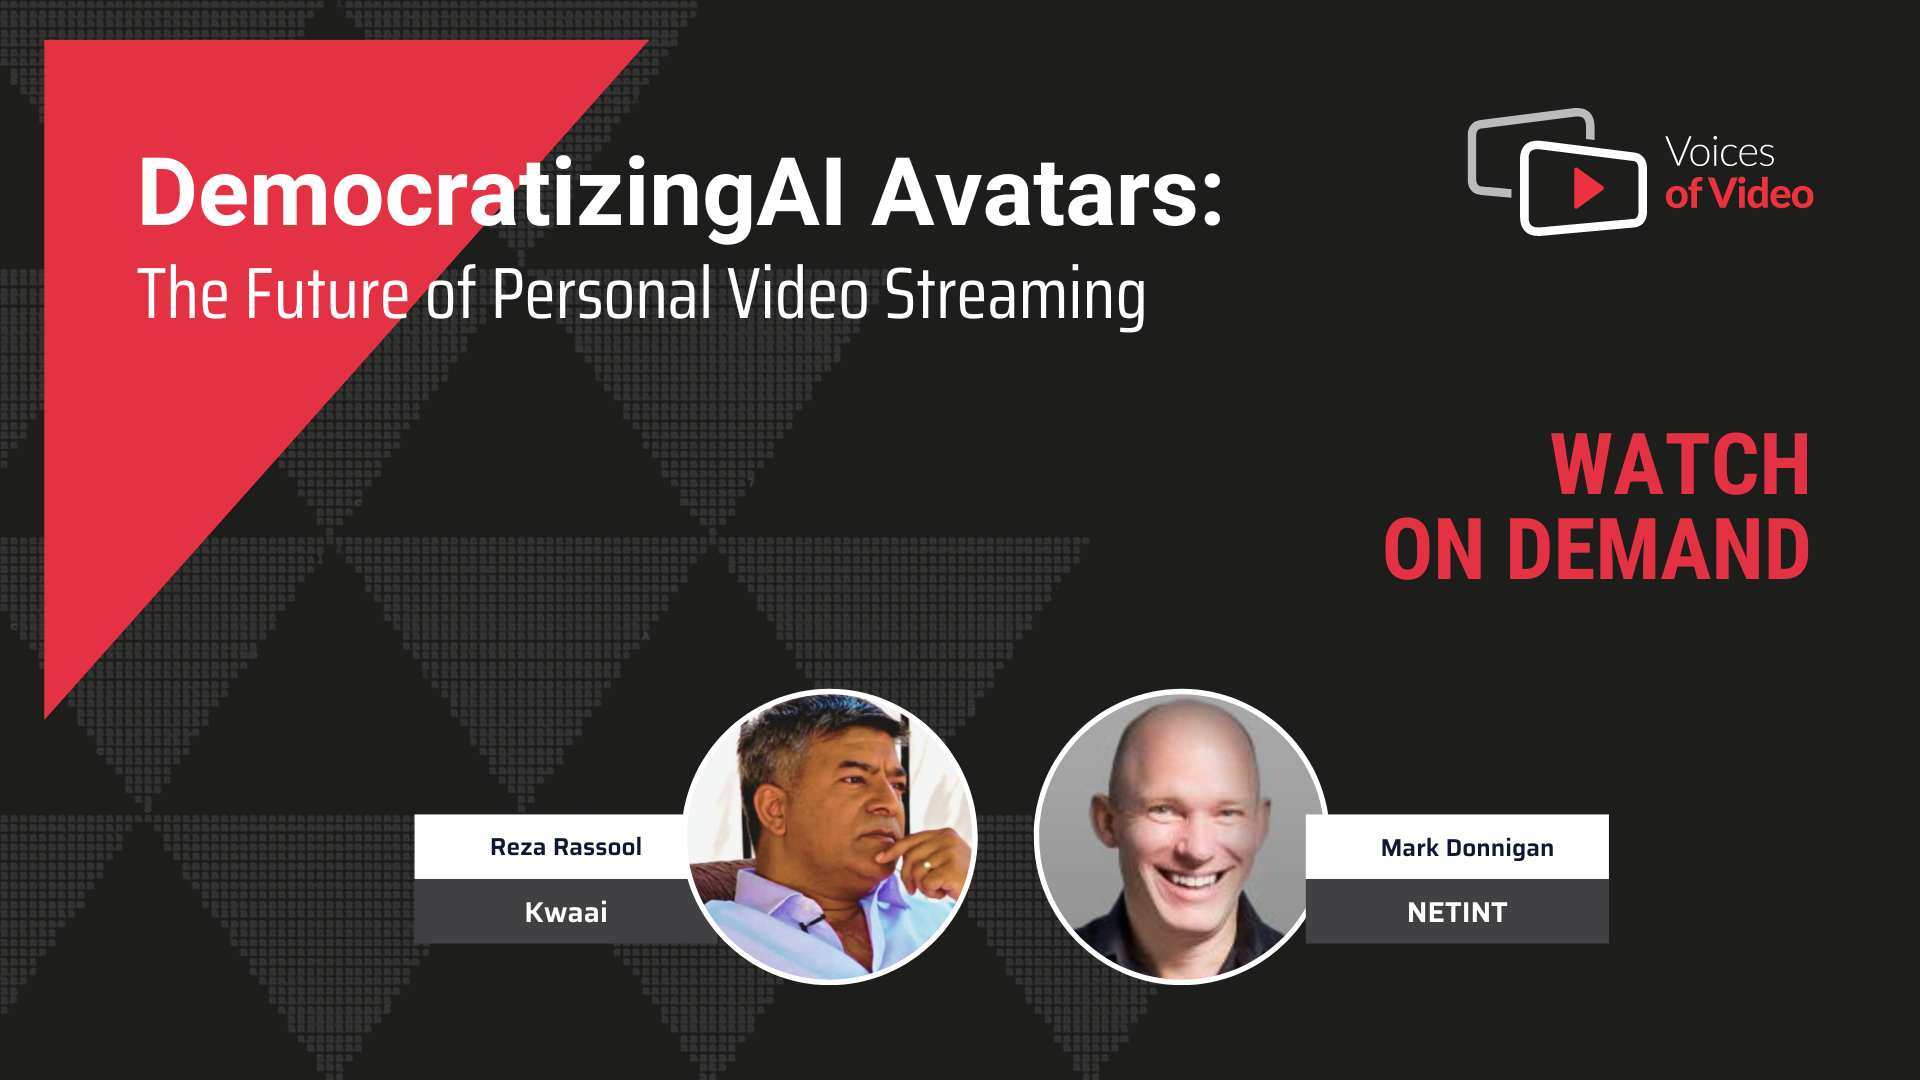 Democratizing AI Avatars: The Future of Personal Video Streaming - with Reza Rassool from Kwai.ai